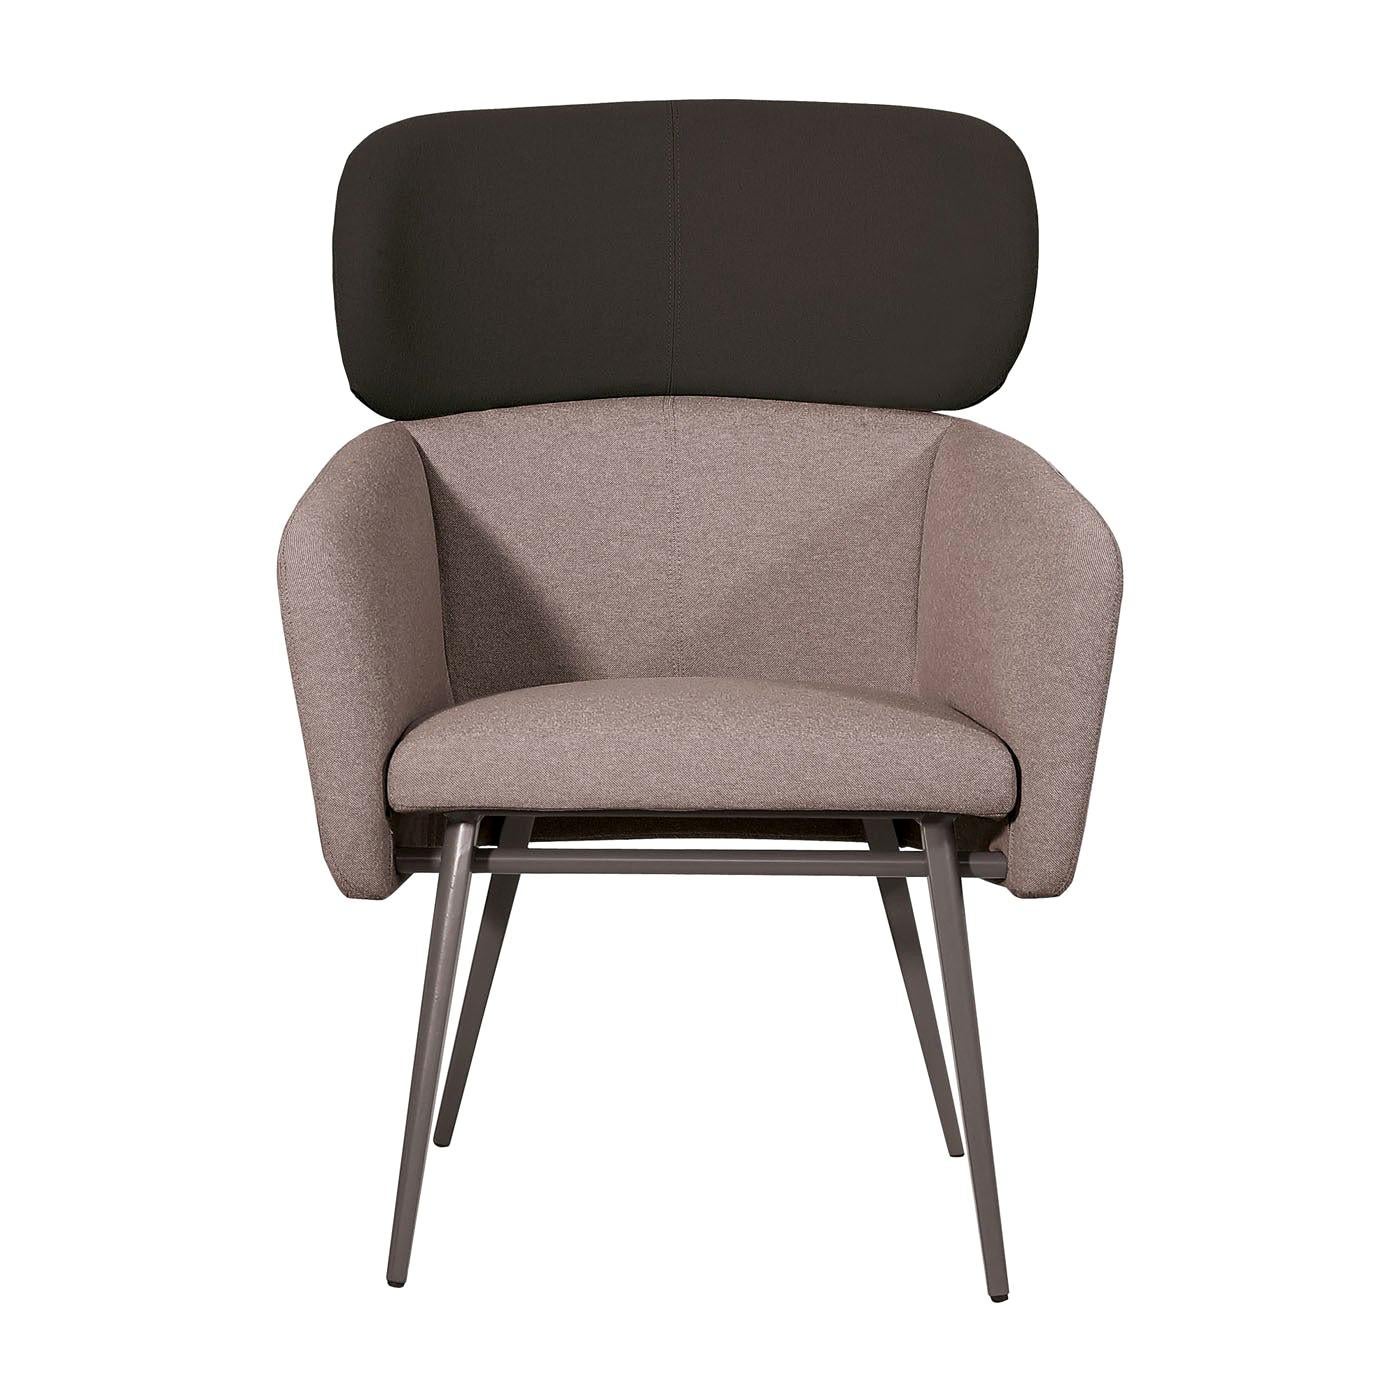 Balù XL Met Gray and Black Chair by Emilio Nanni